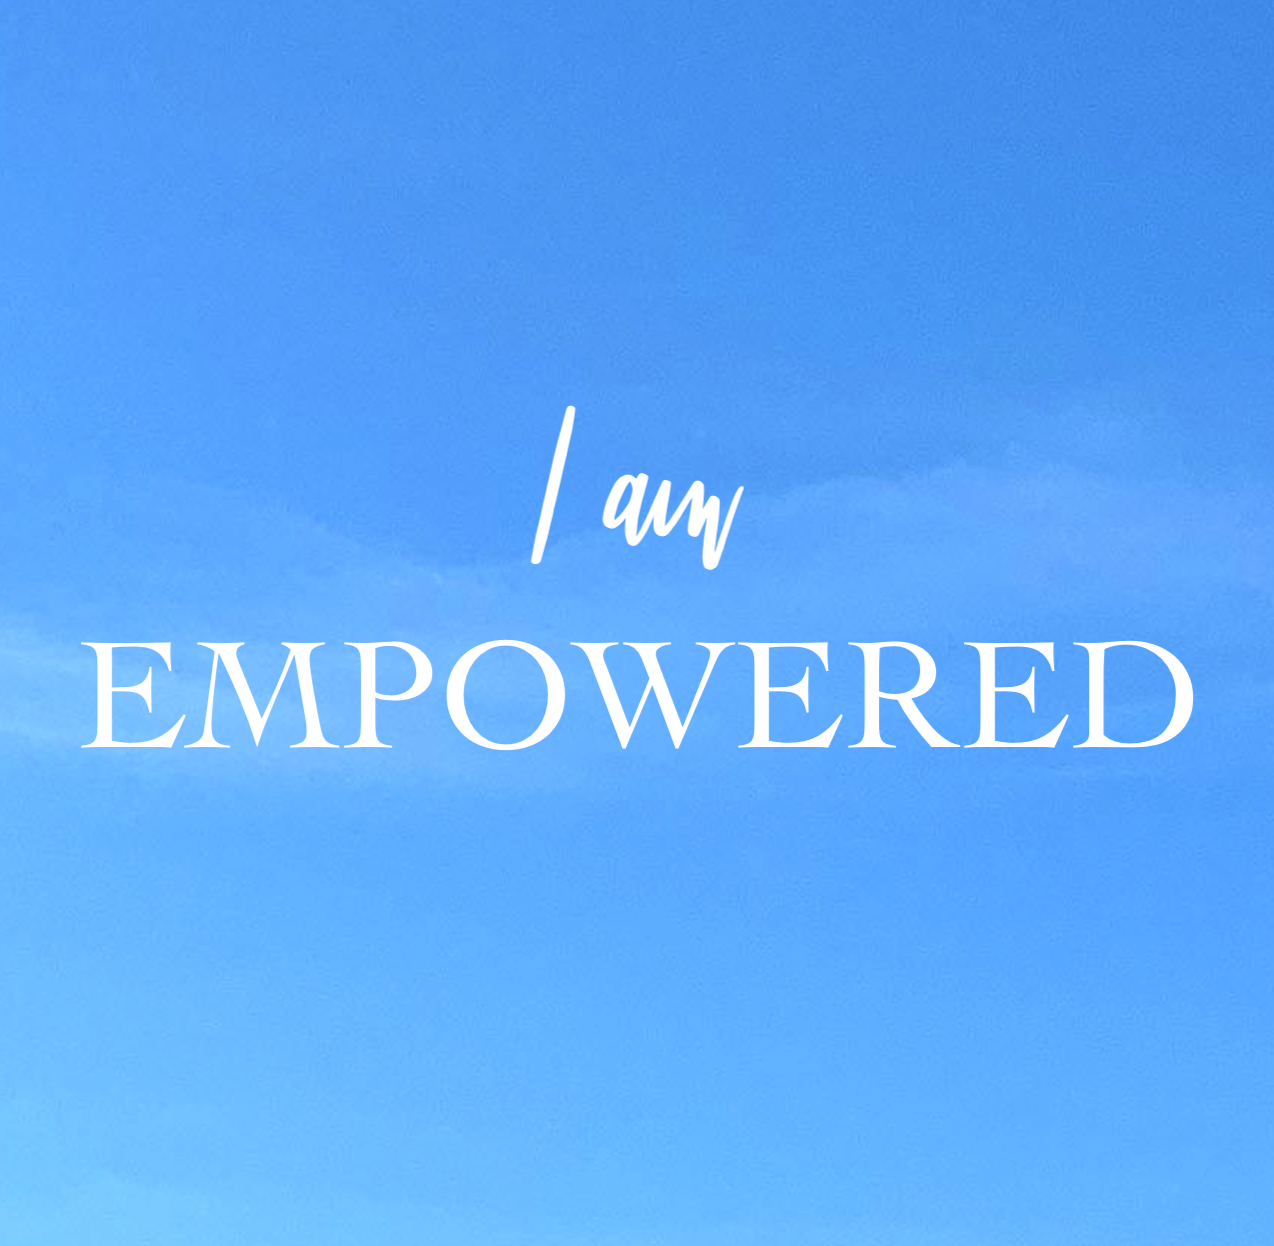 Mantra meditation "I am empowered"